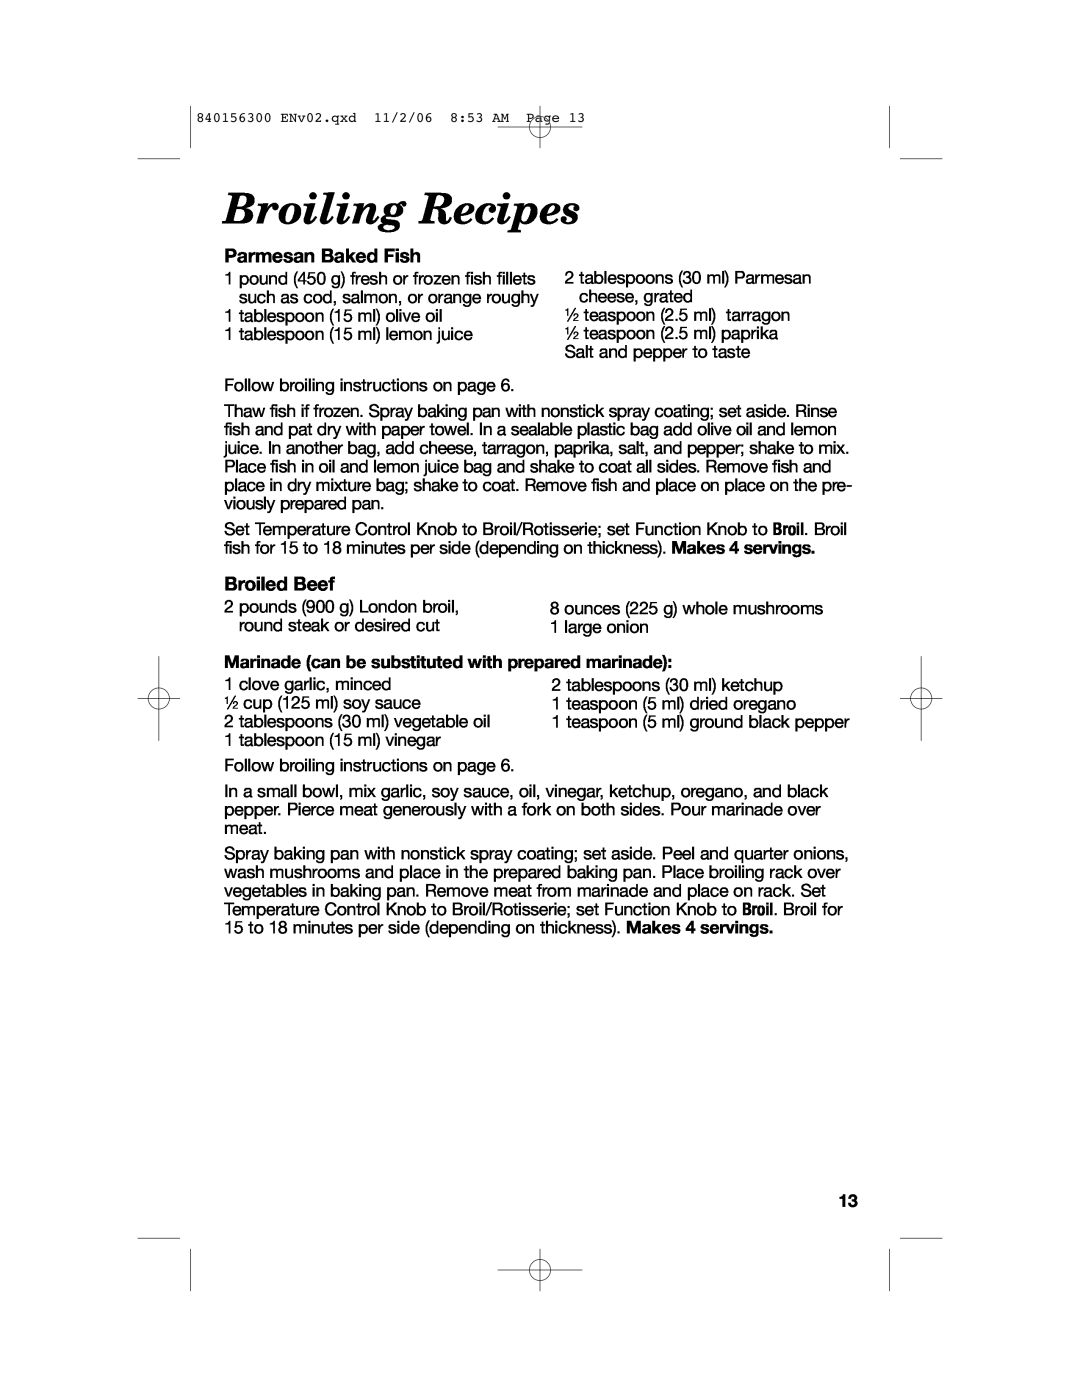 Hamilton Beach 840156300 manual Broiling Recipes, Parmesan Baked Fish, Broiled Beef 